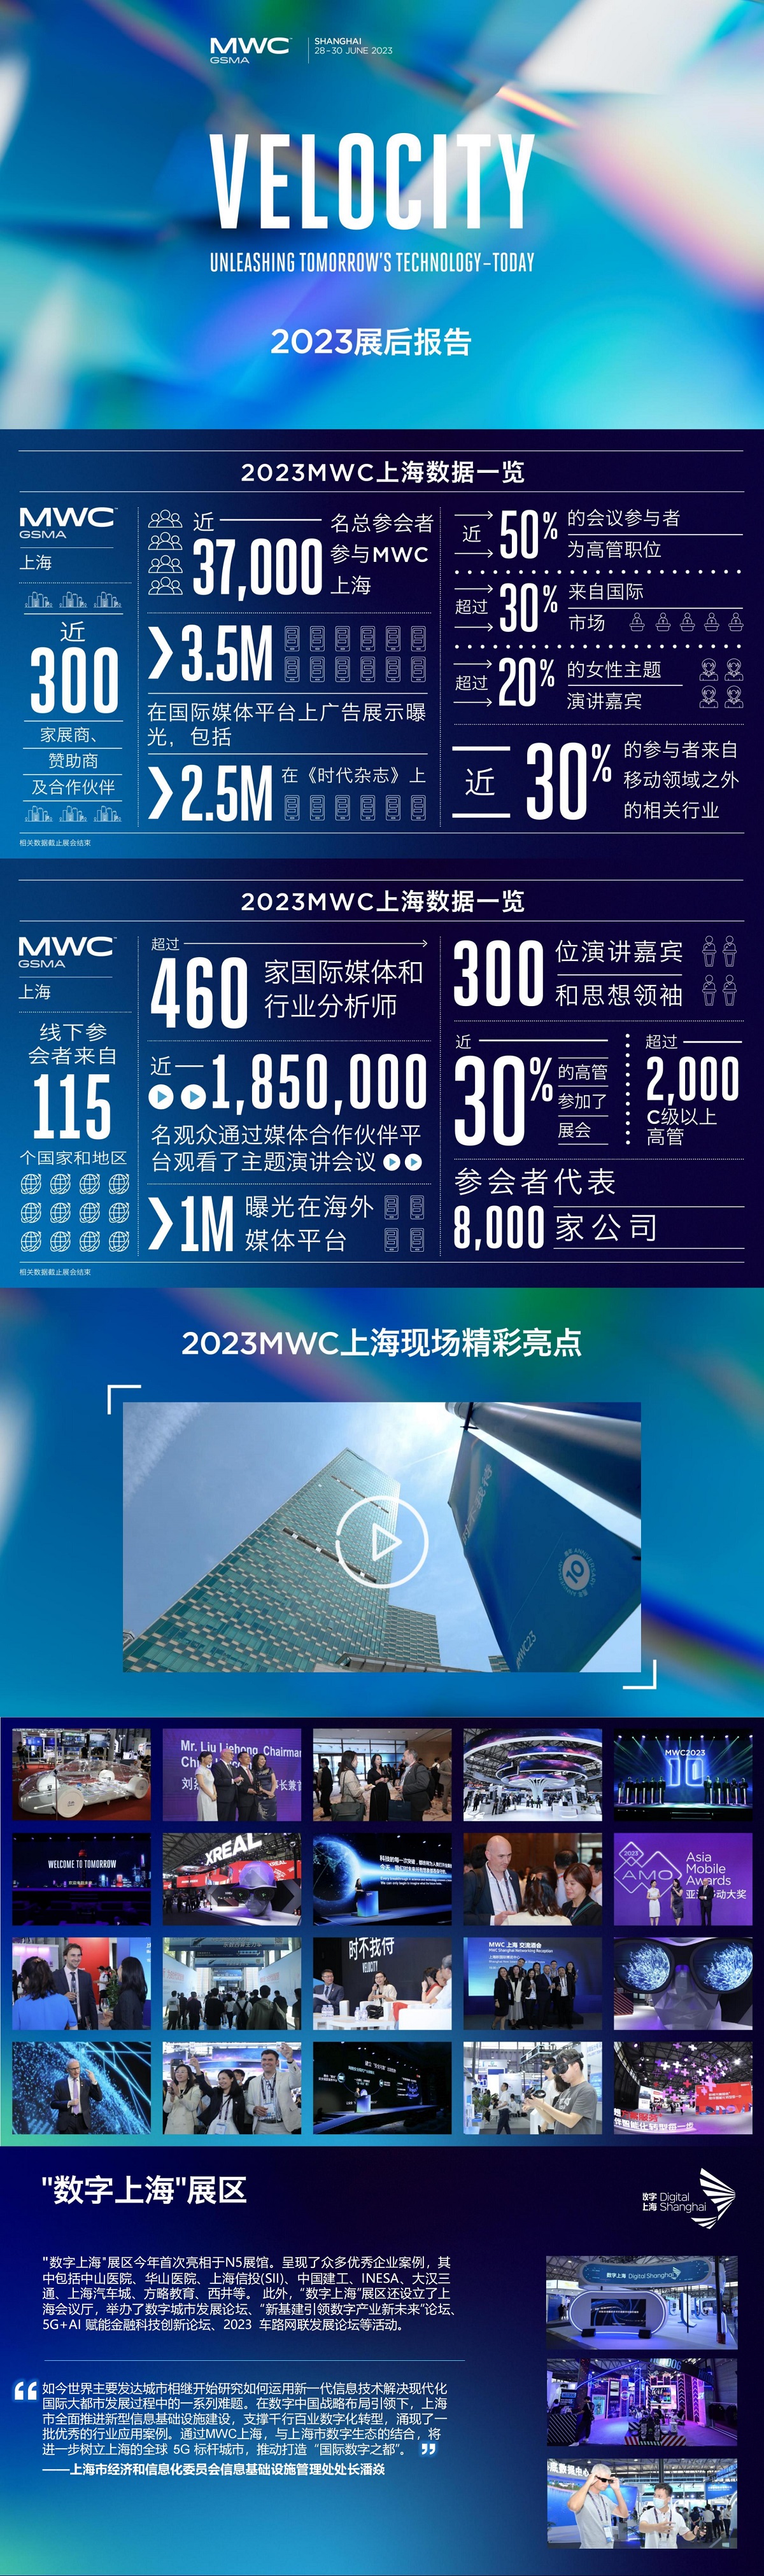 MWC23_Shanghai_Post_Event_Report_CHI_1.jpg